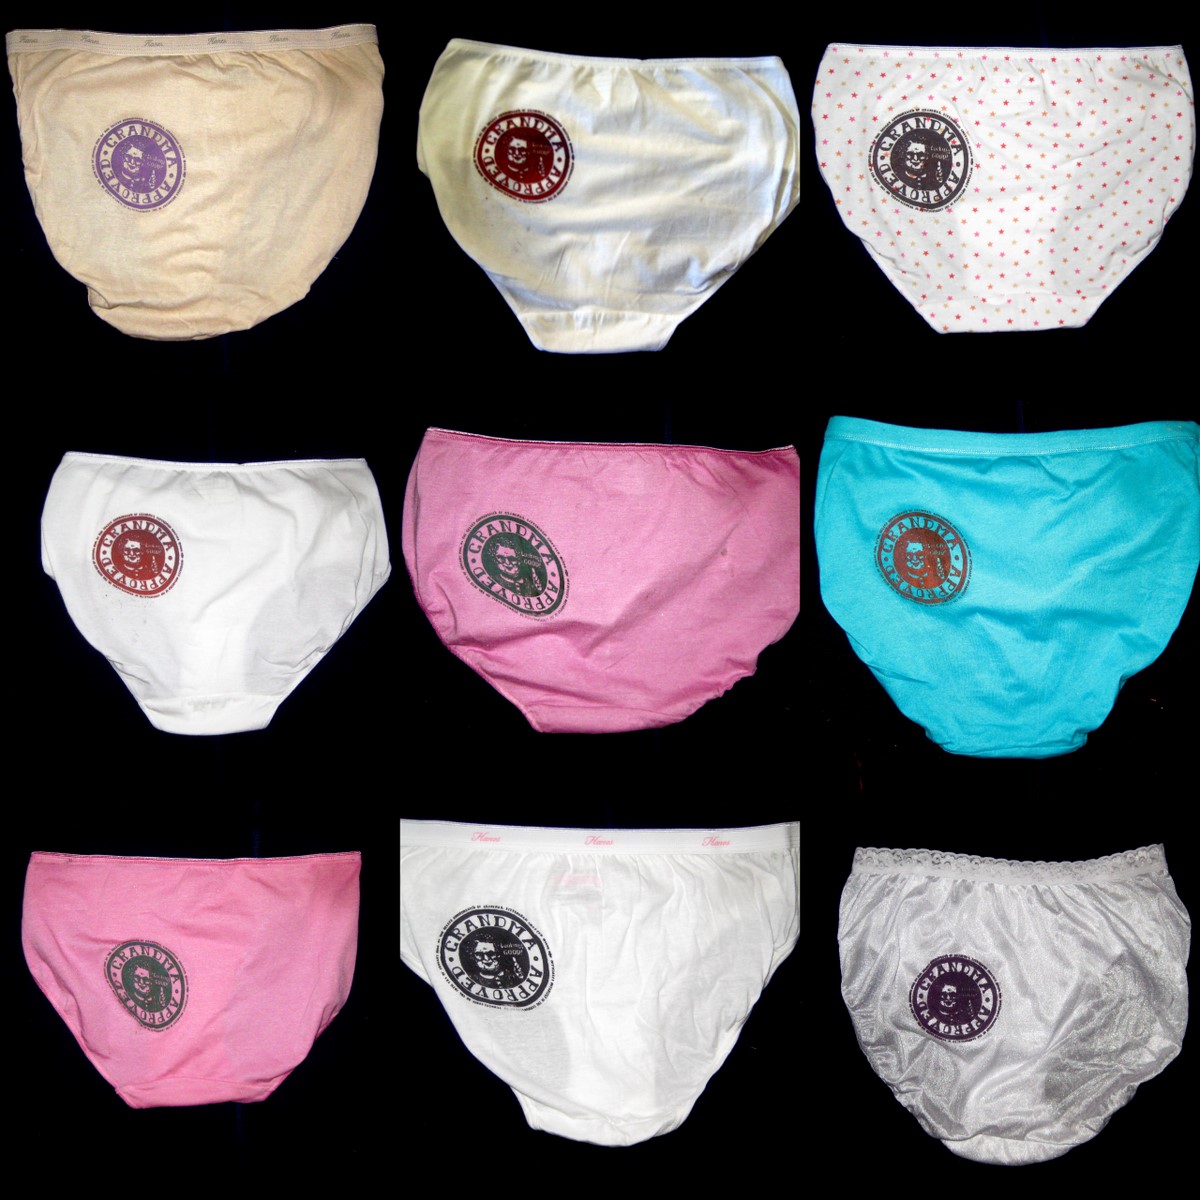 https://www.razblint.com/wp-content/uploads/2012/12/Razblint-Underwear-Grandma-Approved-Underwear1.jpg